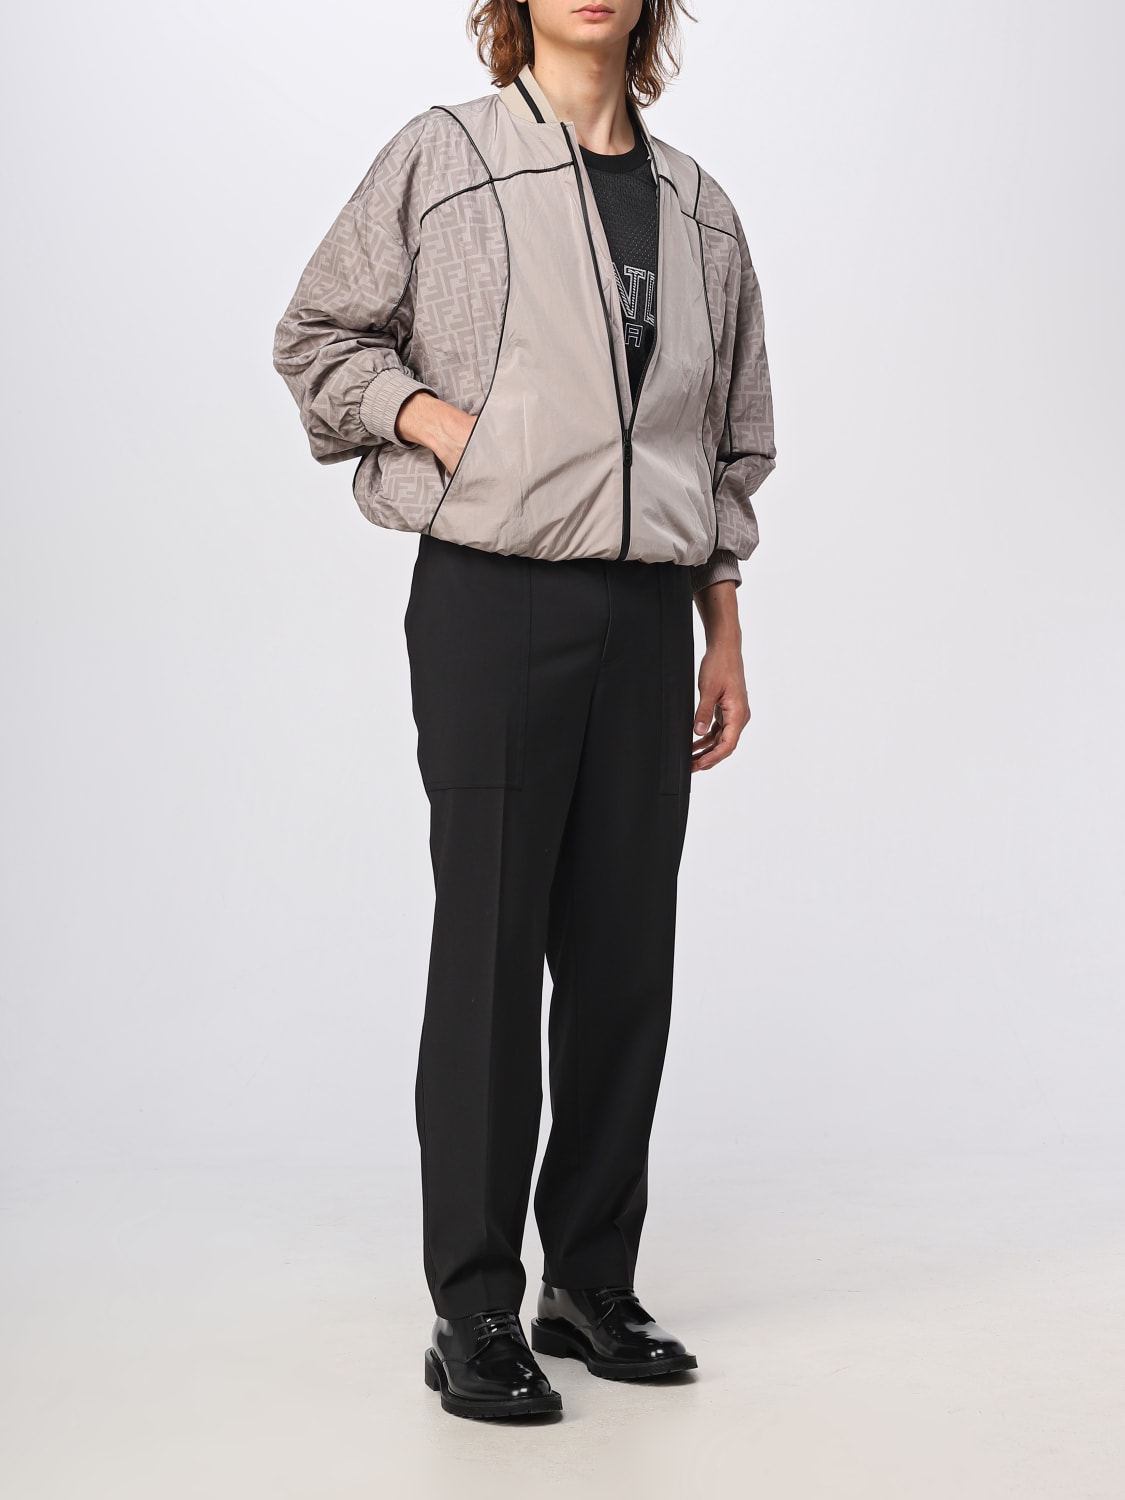 FENDI: nylon jacket - Ebony | Fendi jacket FAA899AP5A online at GIGLIO.COM